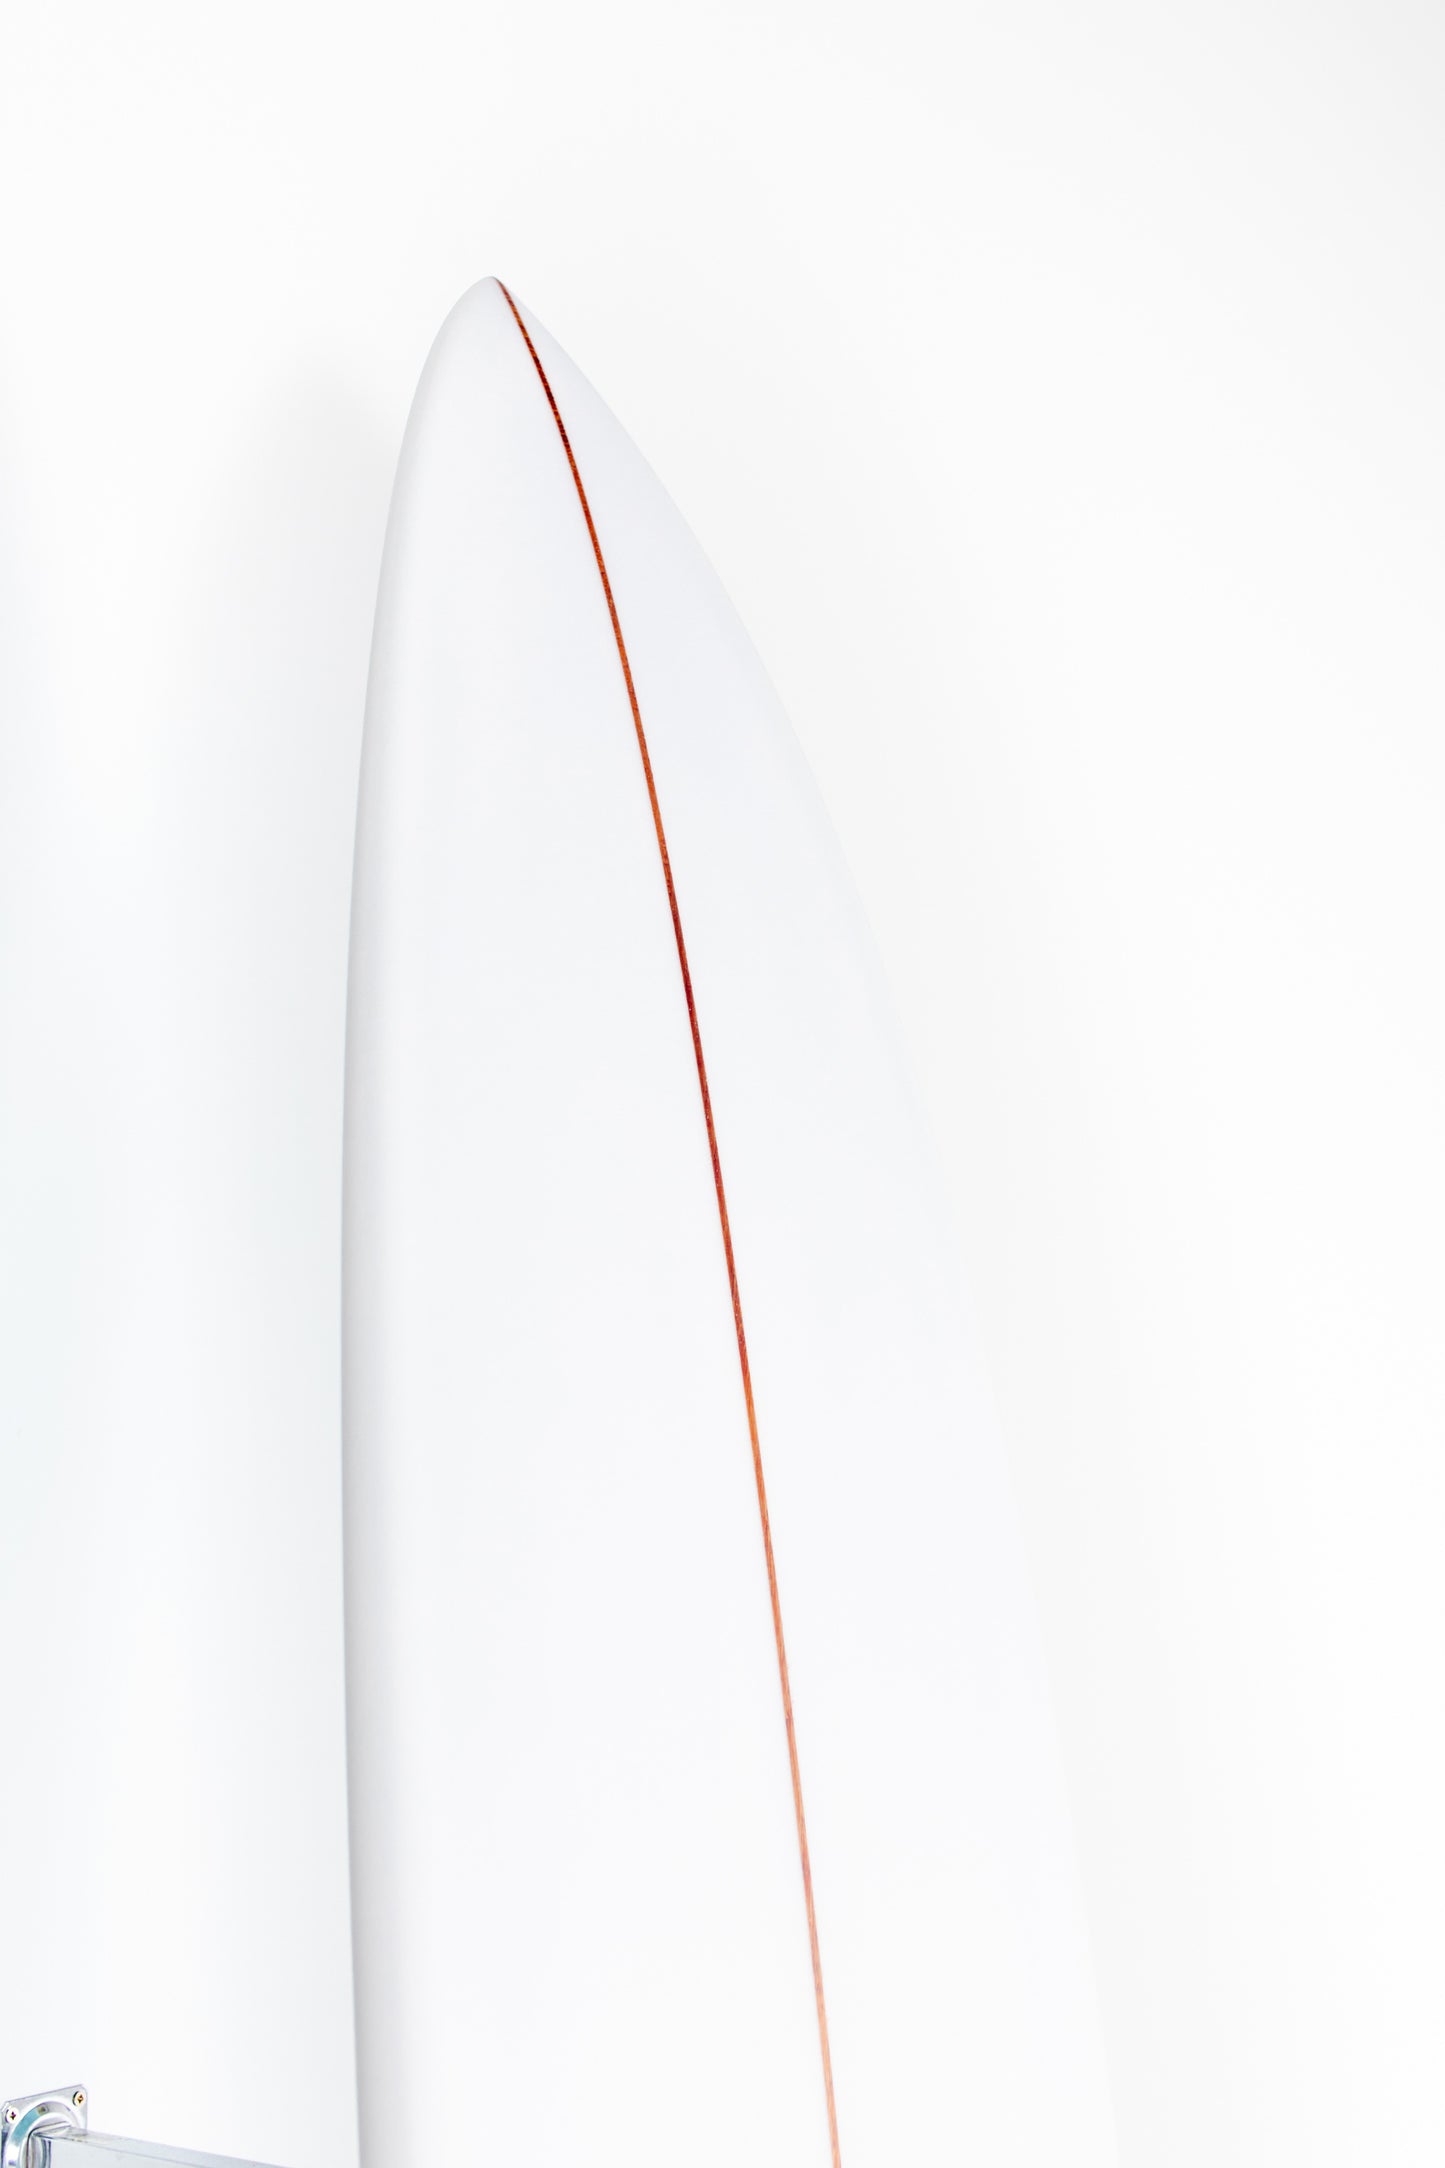 
                  
                    Pukas Surf Shop - Thomas Surfboards - LONG FISH - 7'4"x 21 5/8 x 2 3/4 - Ref. LONGFISH74
                  
                